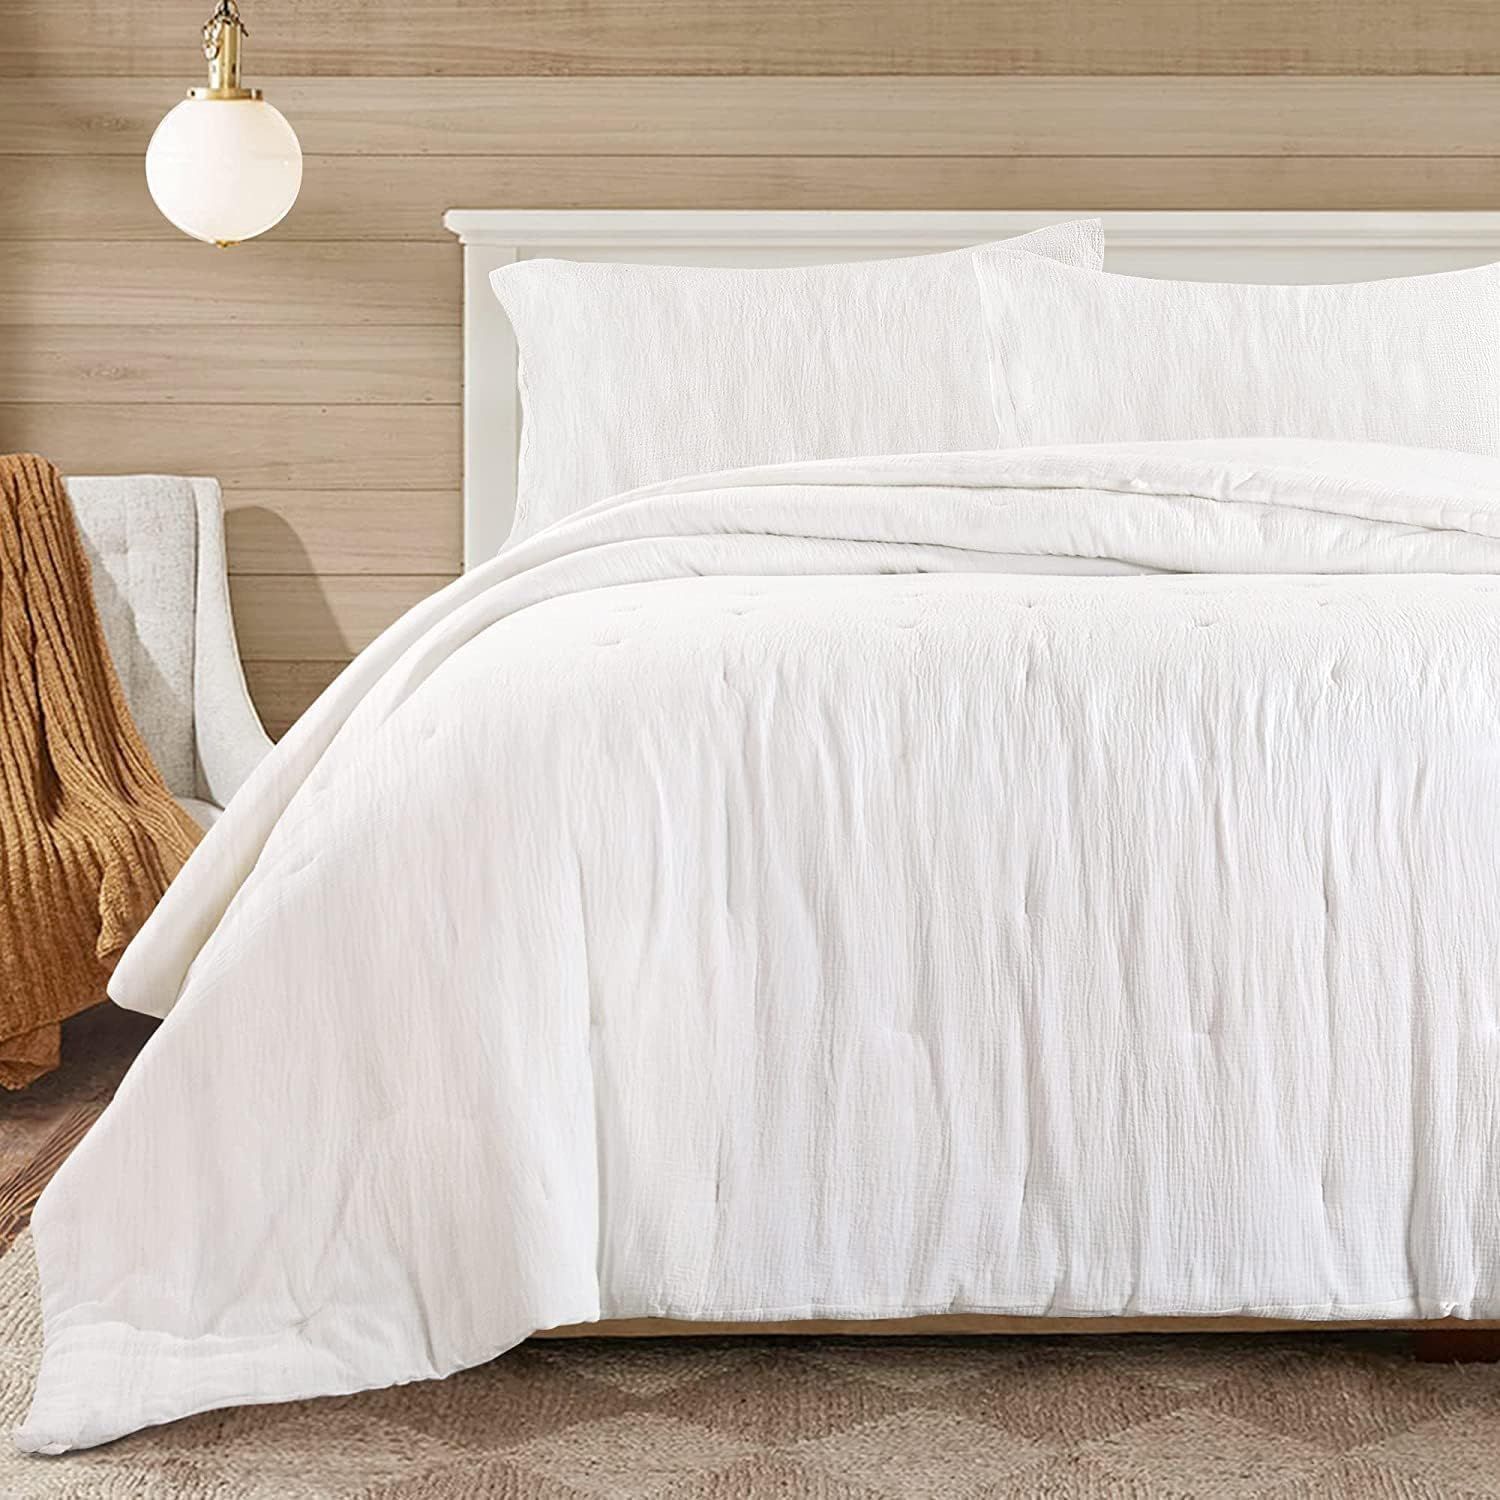 HOMBYS Soft Muslin Comforter Lightweight Oversized Queen Comforter 110x110, 100% Cotton Breathabl... | Amazon (US)